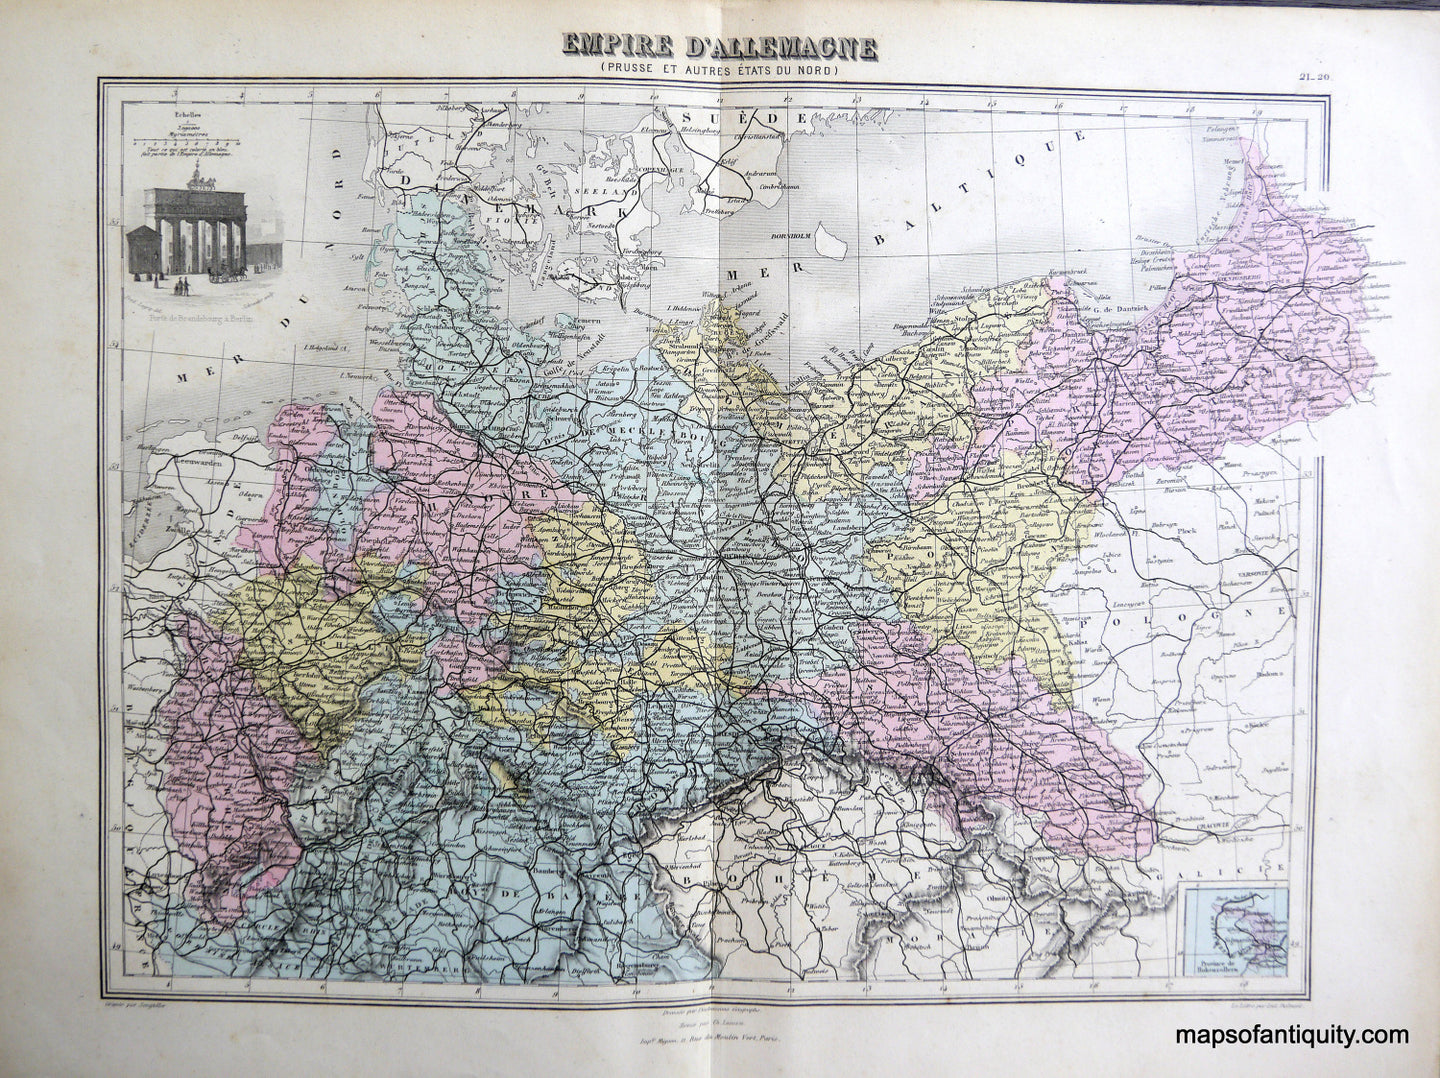 Antique-Hand-Colored-Map-Empire-d'Allemagne-Prusse-et-Autres-Etats-du-Nord.-Europe-Germany-1884-Migeon-Maps-Of-Antiquity